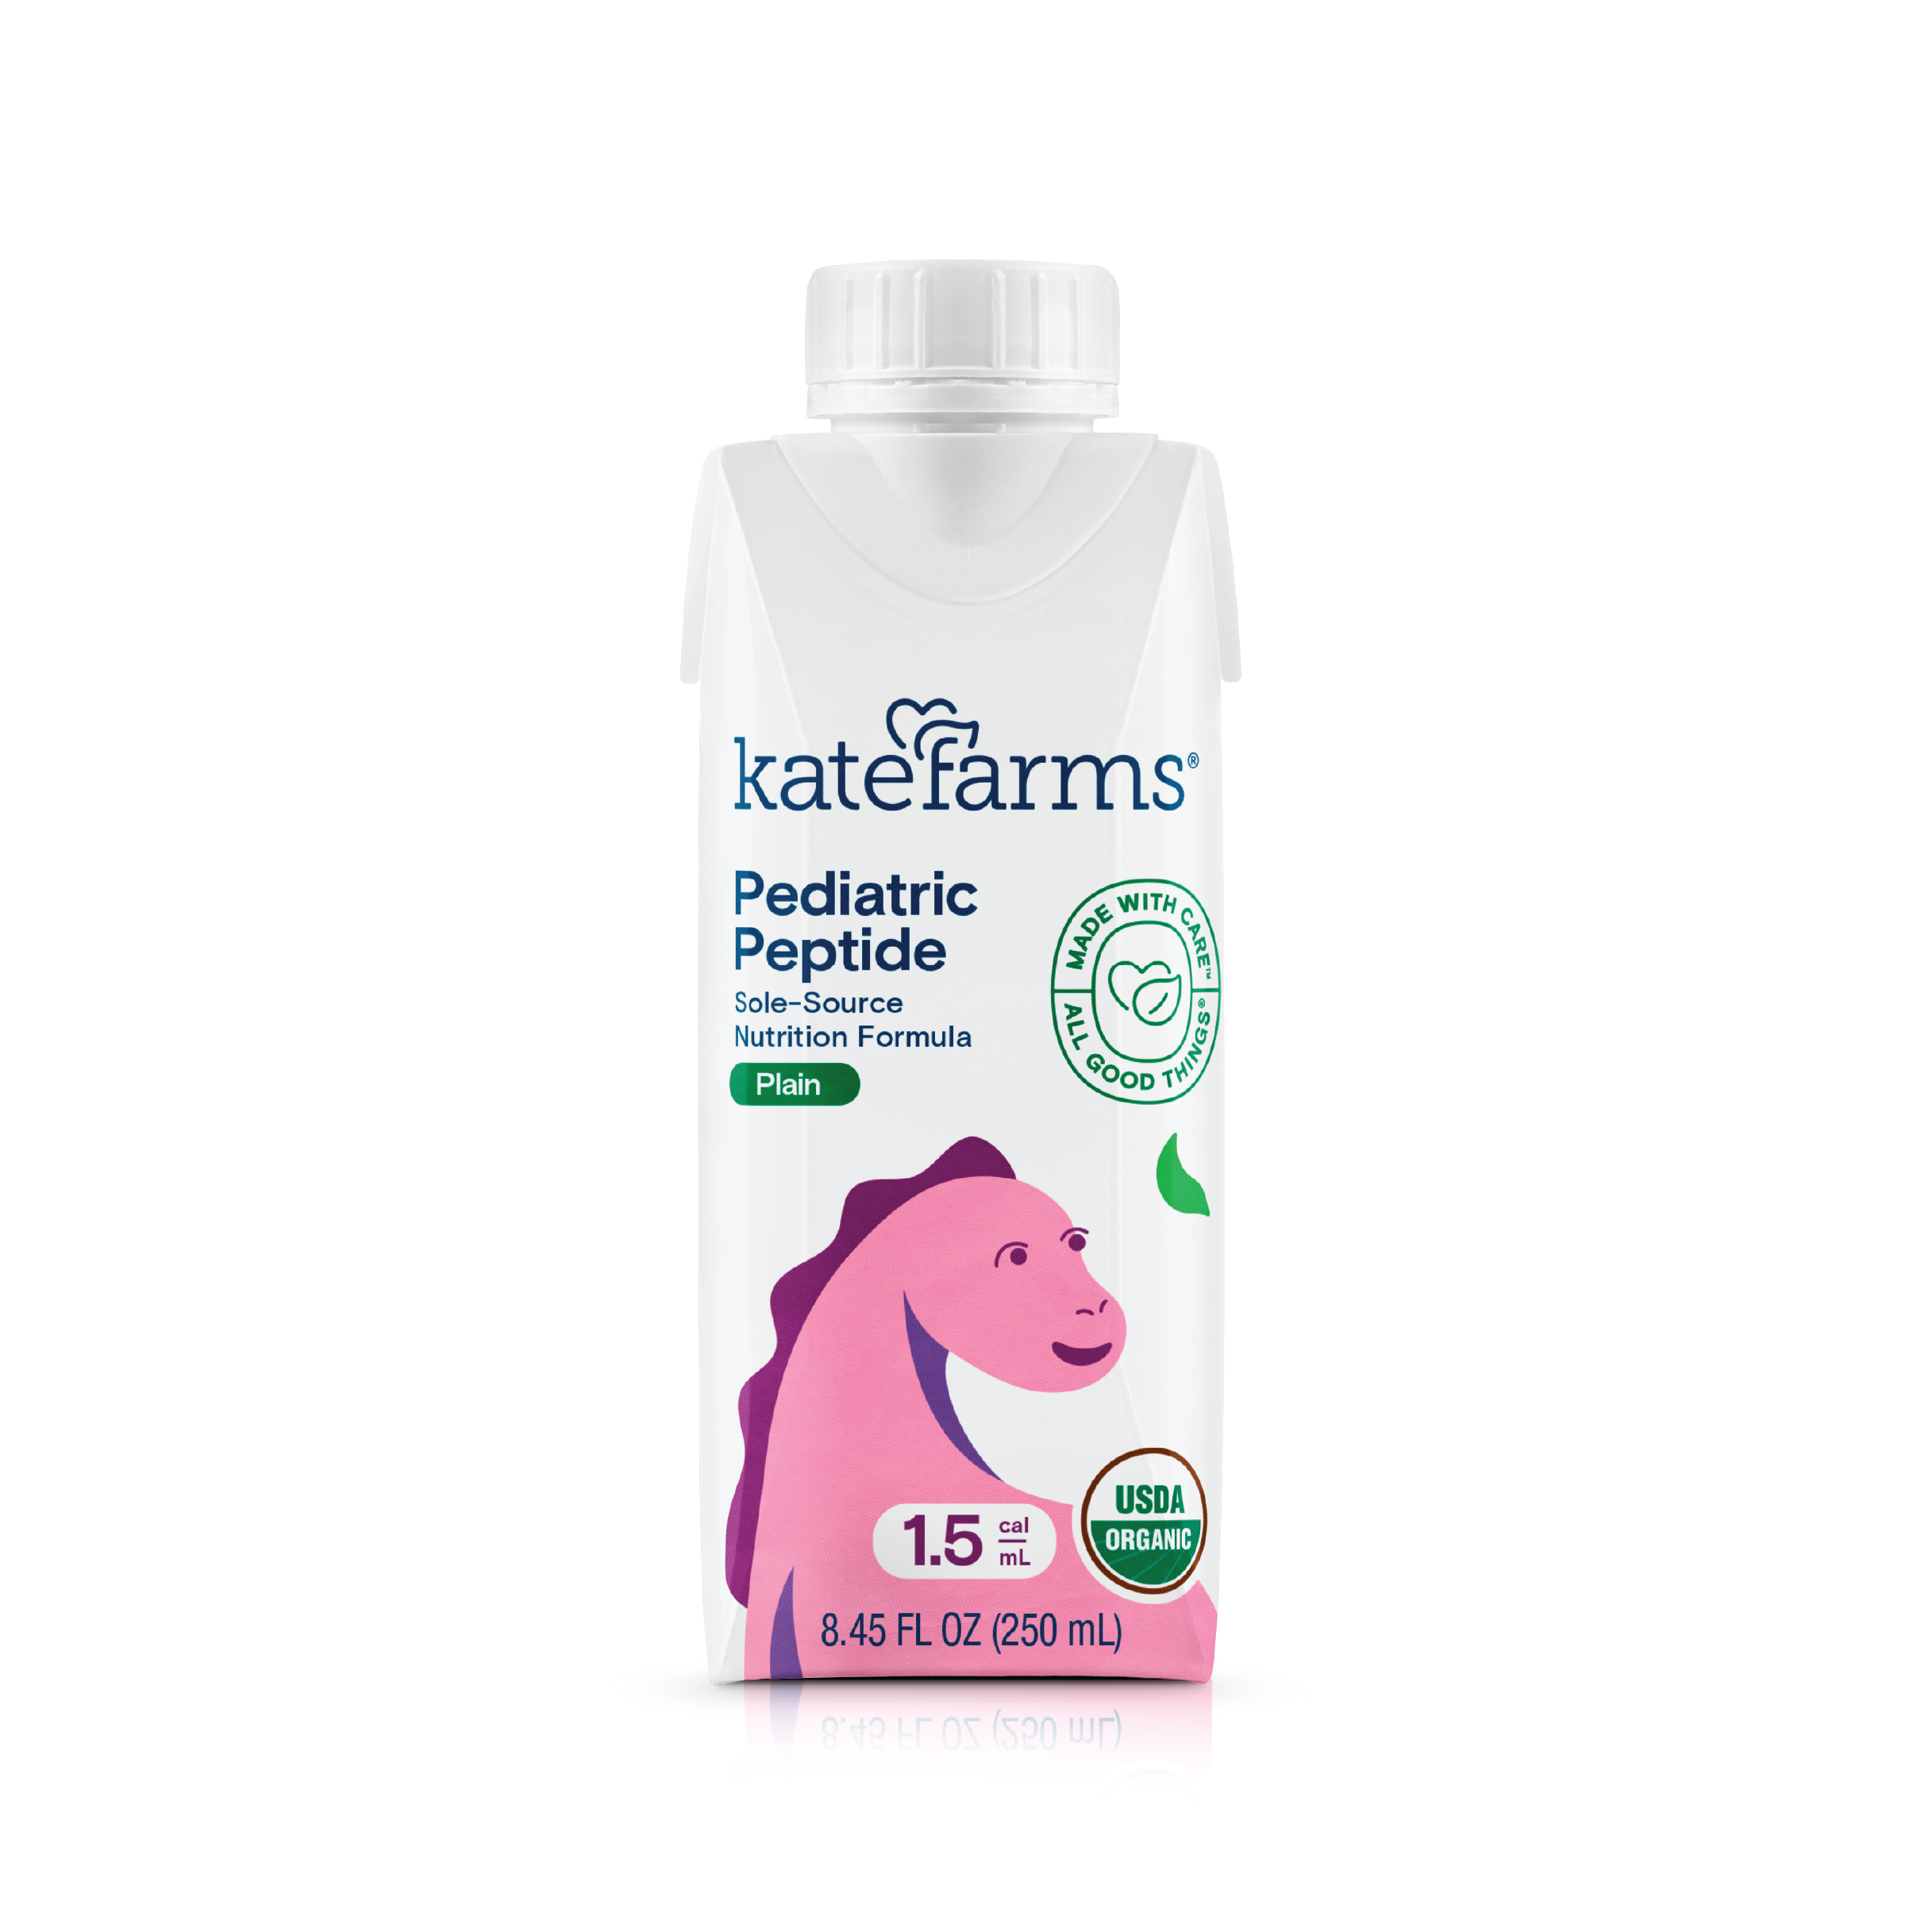 Pediatric Peptide 1.5 Plain